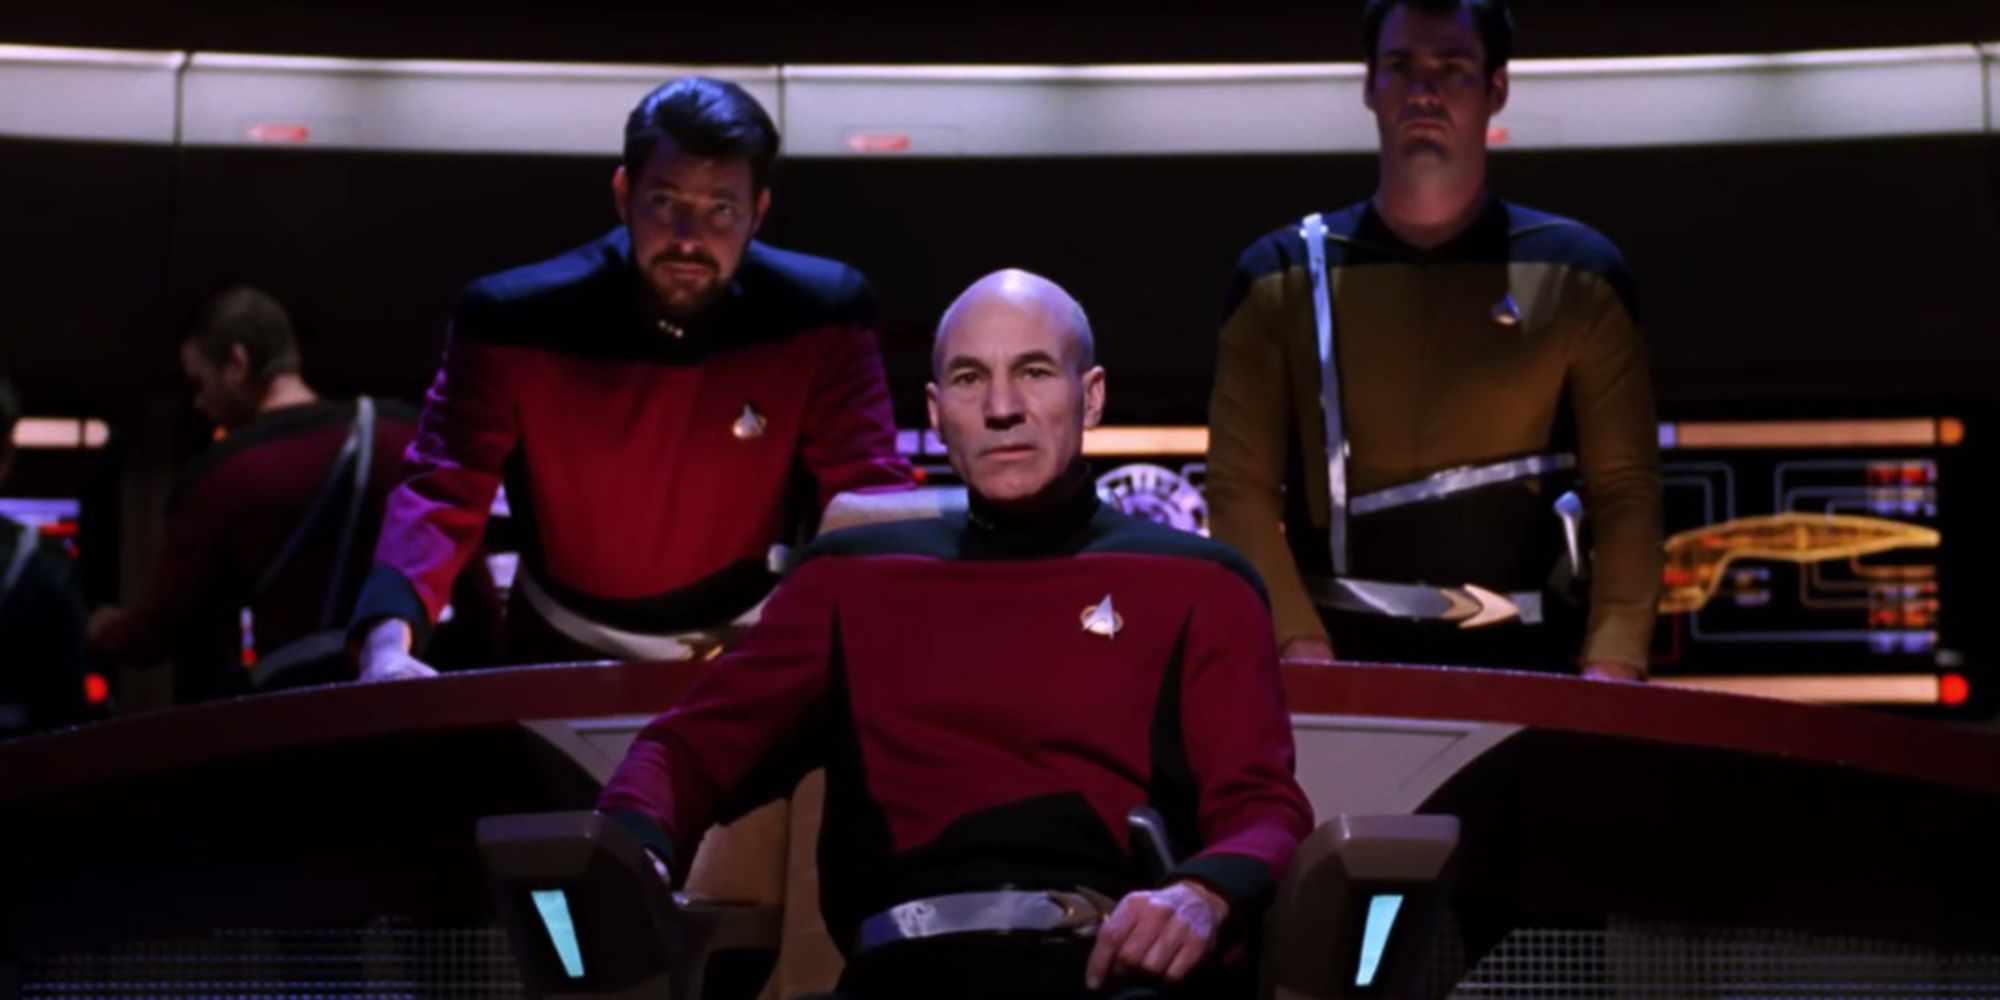 Picard on the Bridge in YESTERDAY'S ENTERPRISE